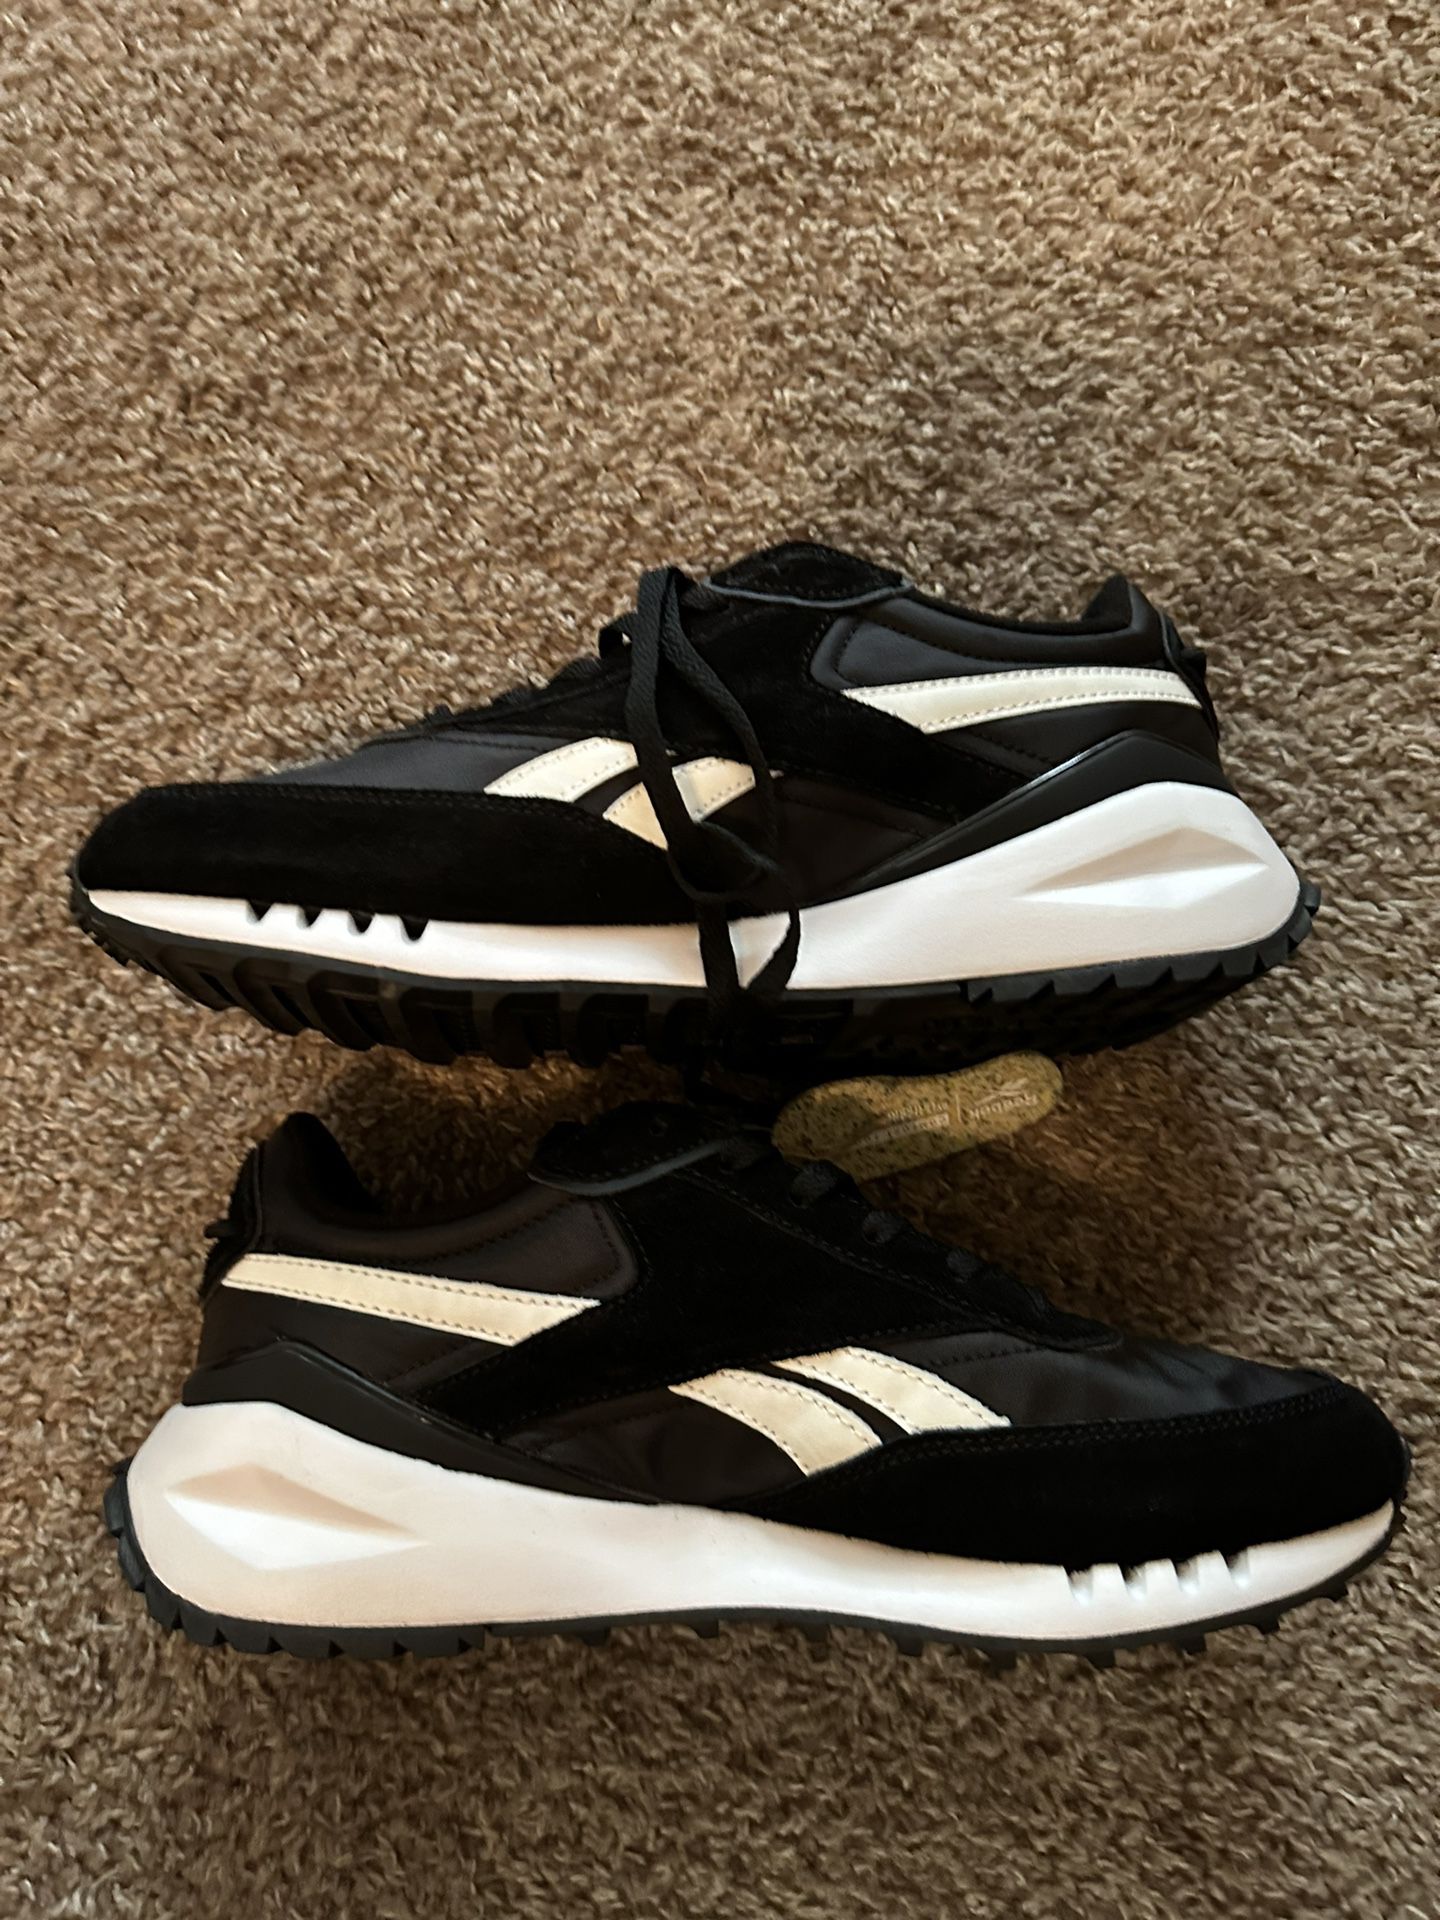 New Reebok Running Shoes 